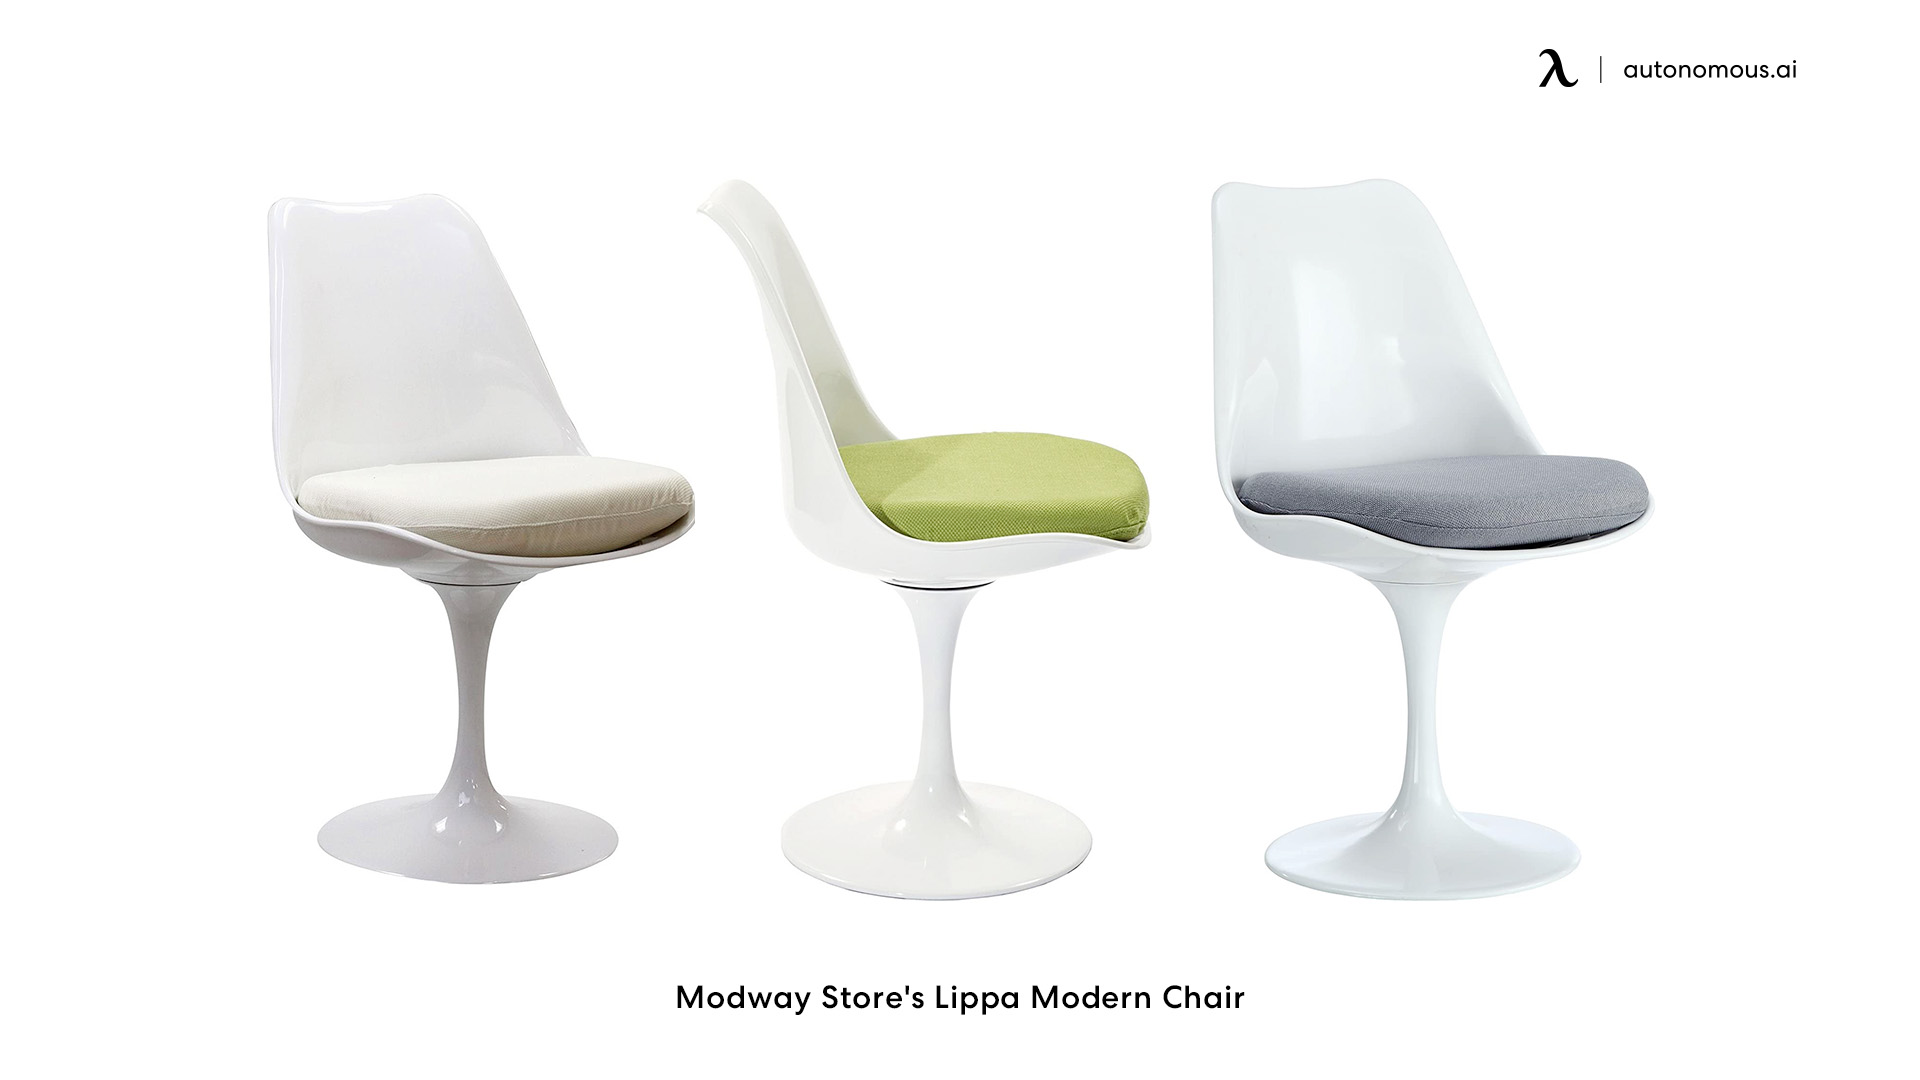 Modway Store's Lippa Modern aesthetic desk chair